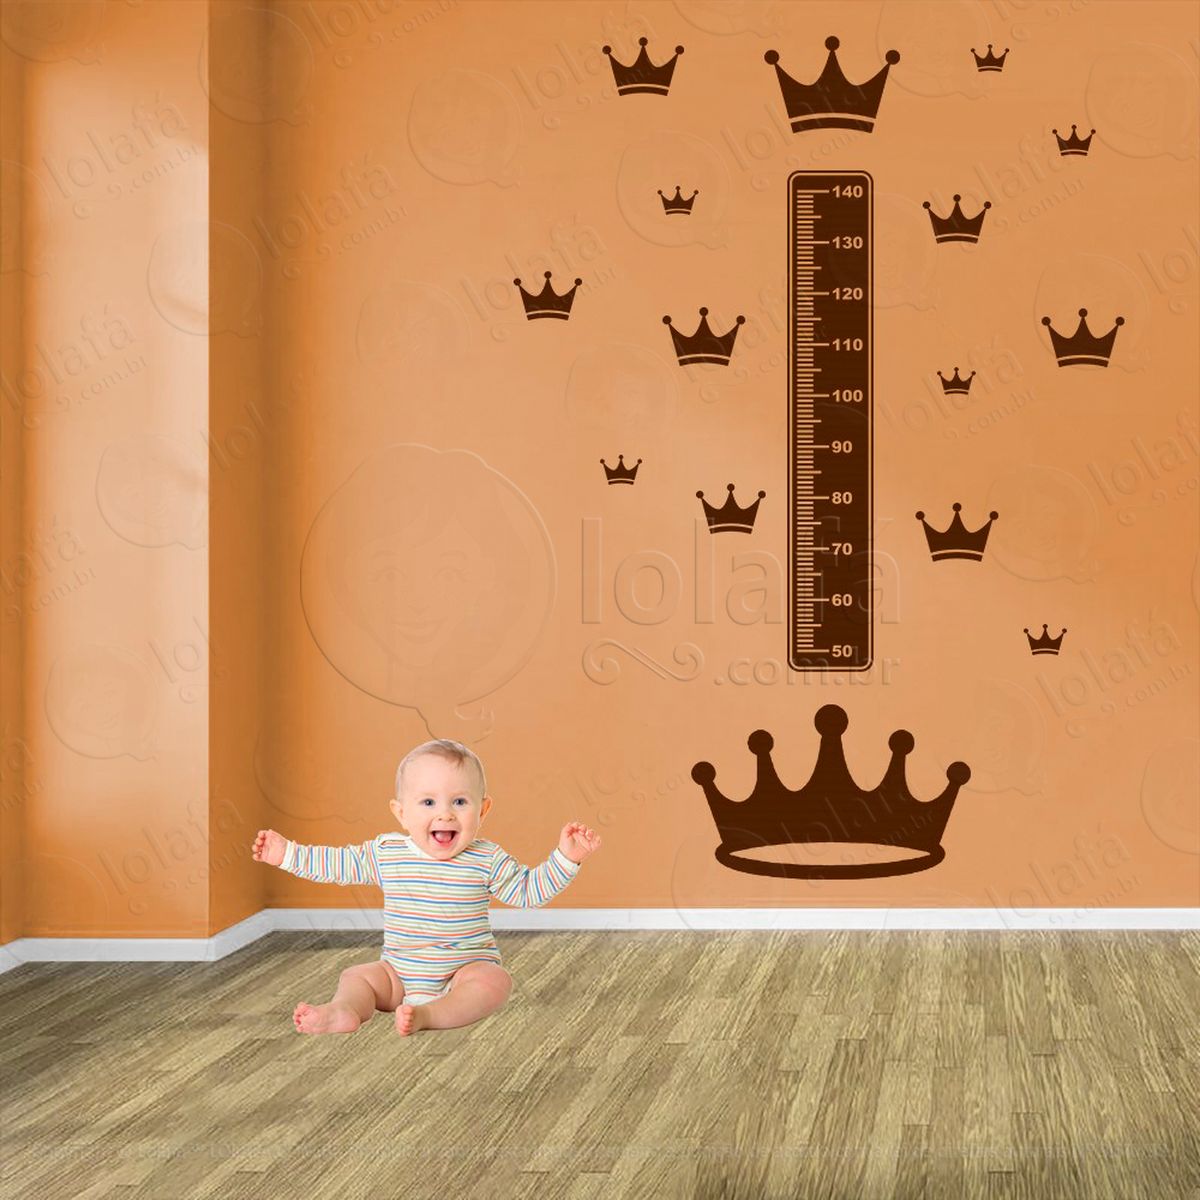 coroa e coroas adesivo régua de crescimento infantil, medidor de altura para quarto, porta e parede - mod:584